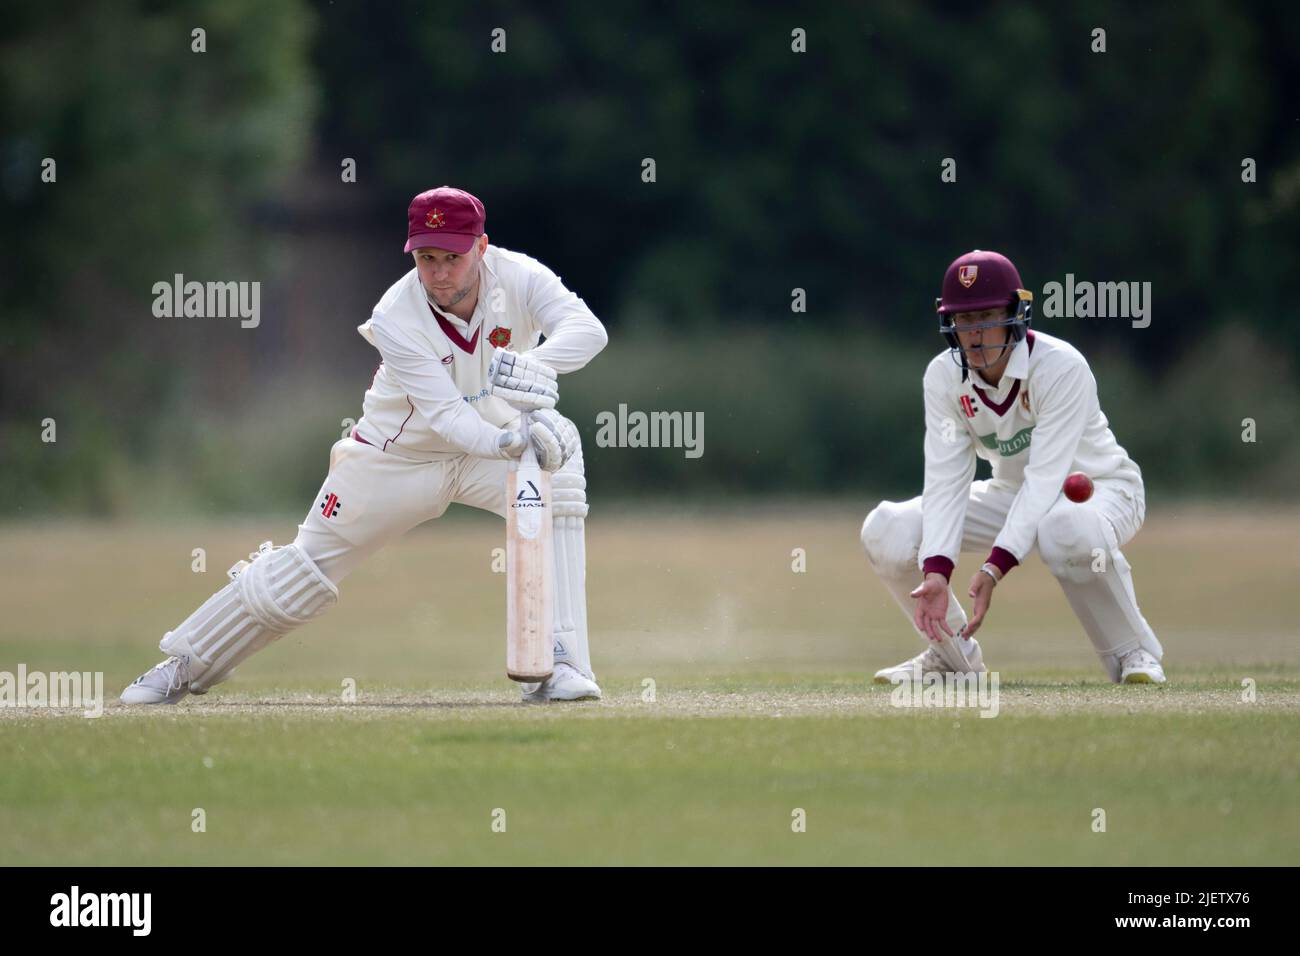 Cricket batsman playing shot Stock Photo